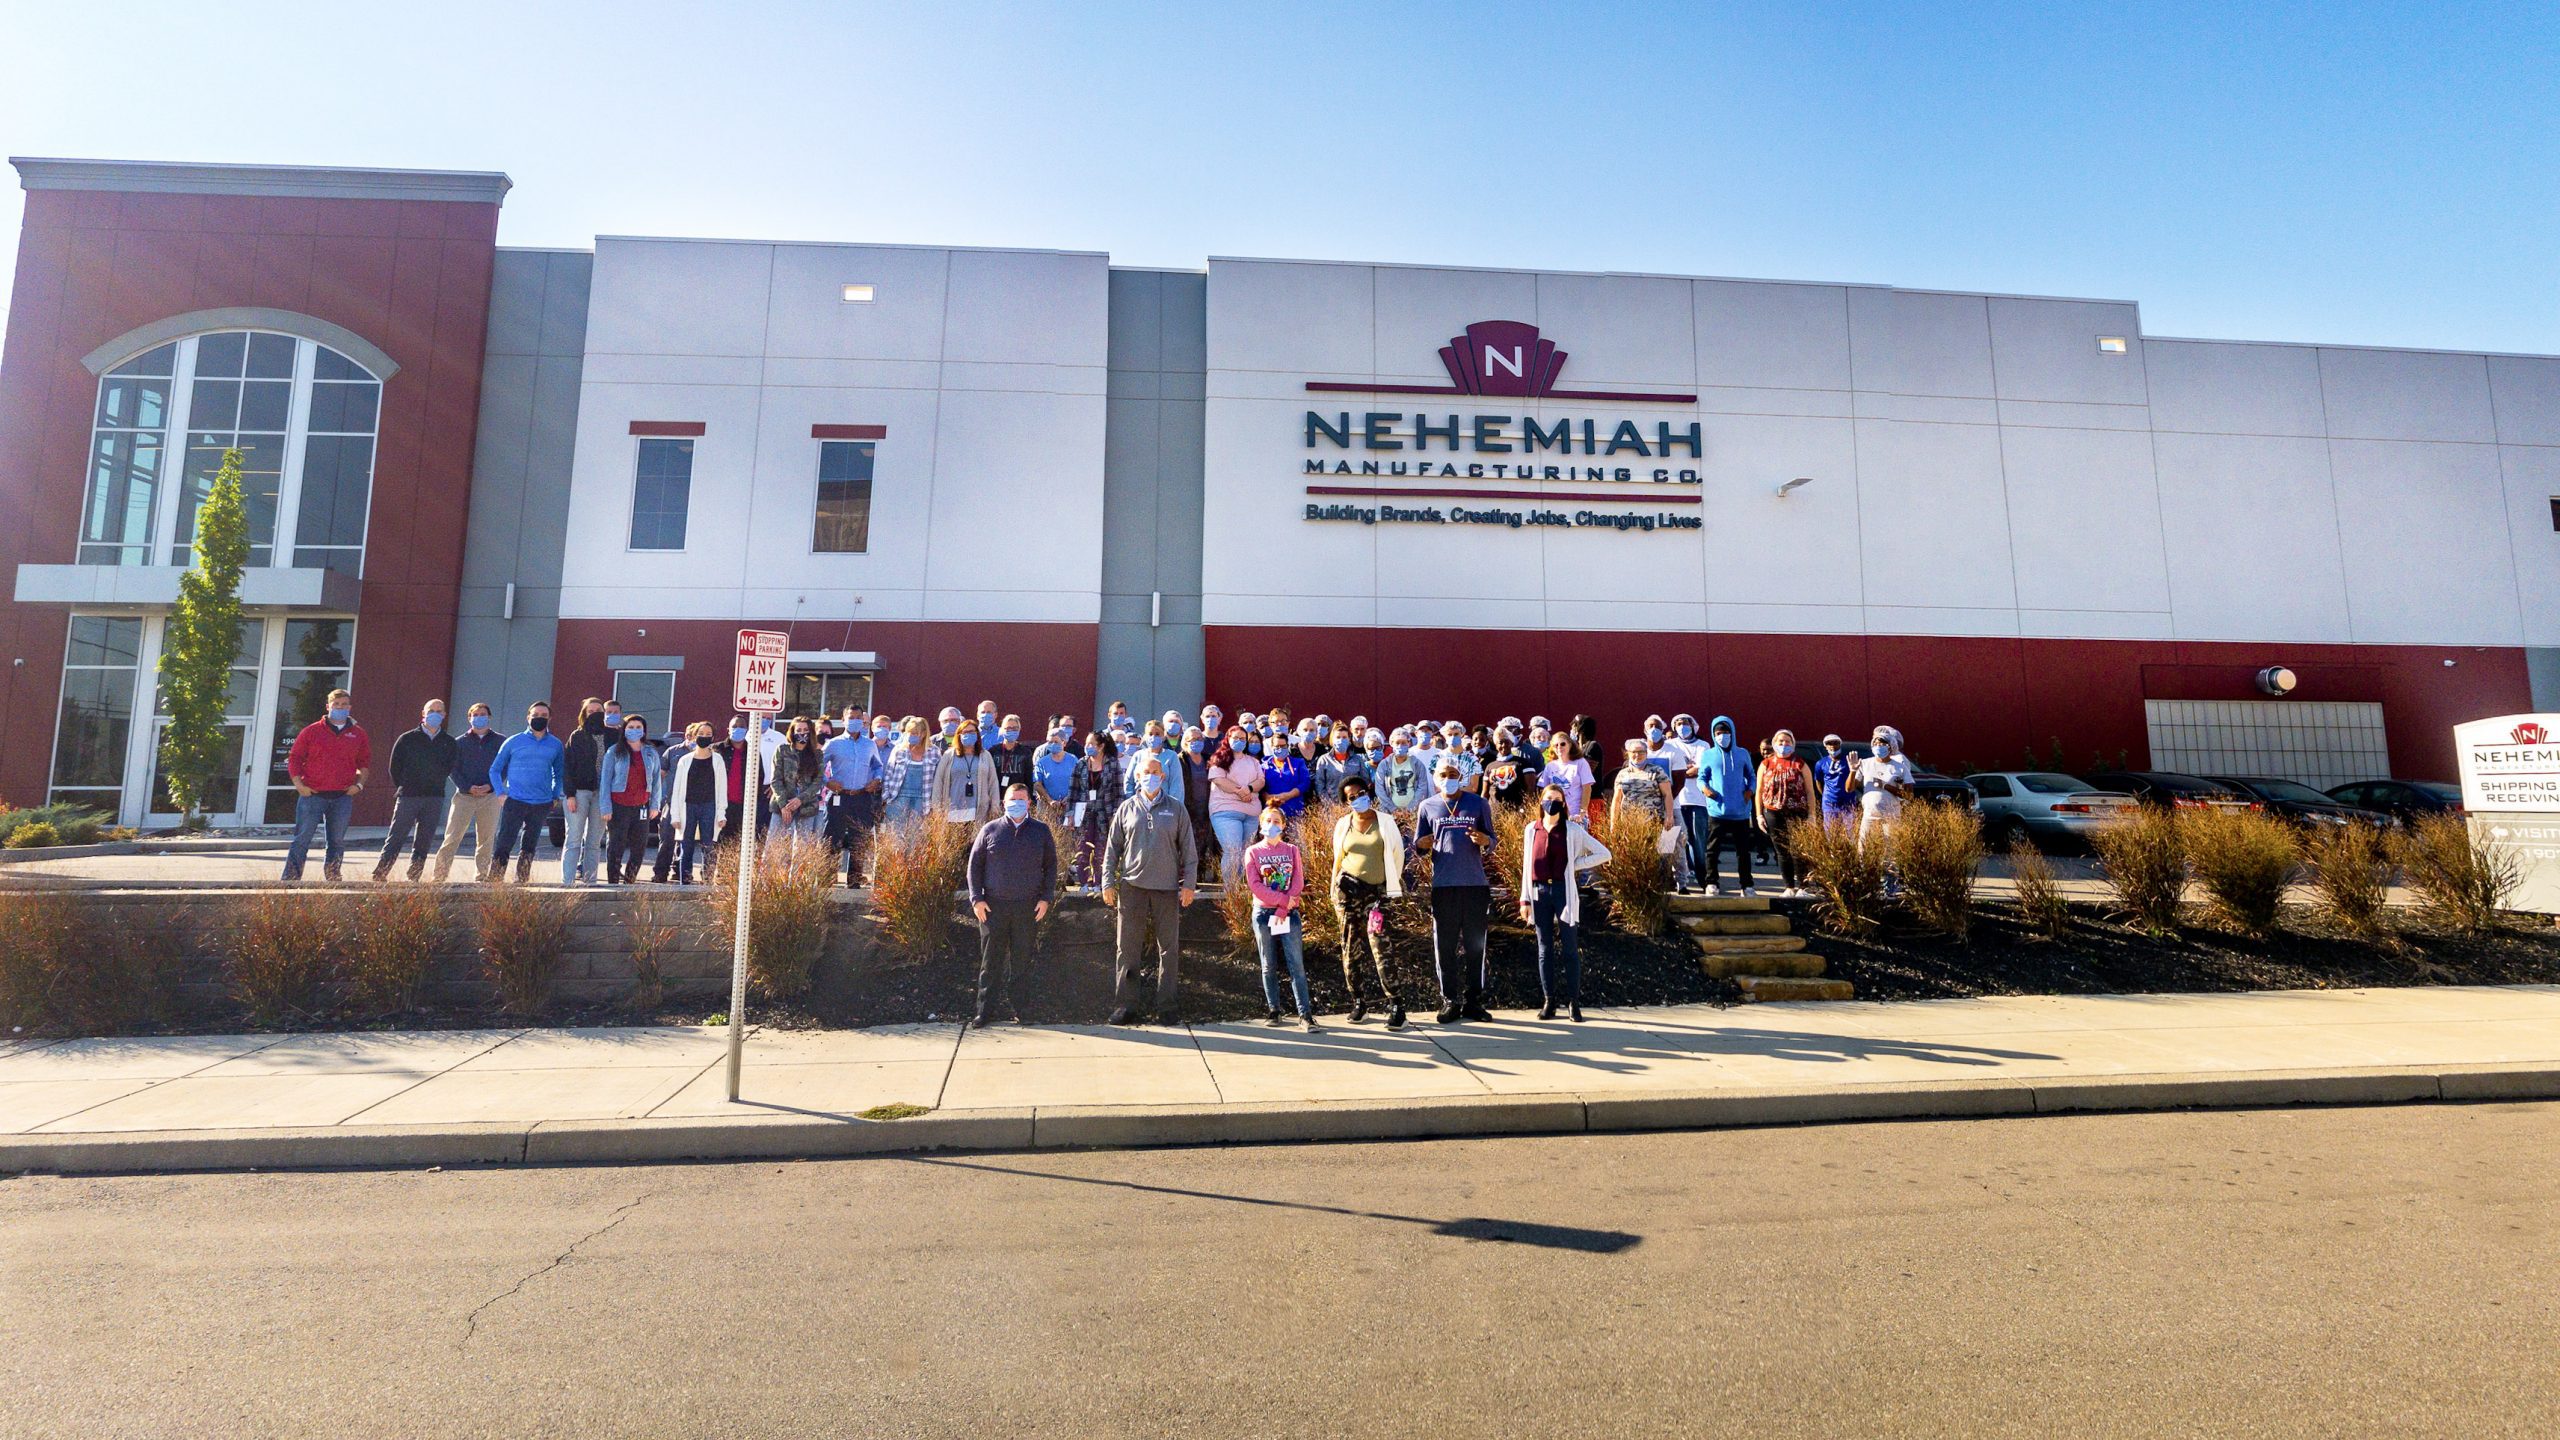 Nehemiah Manufacturing Building